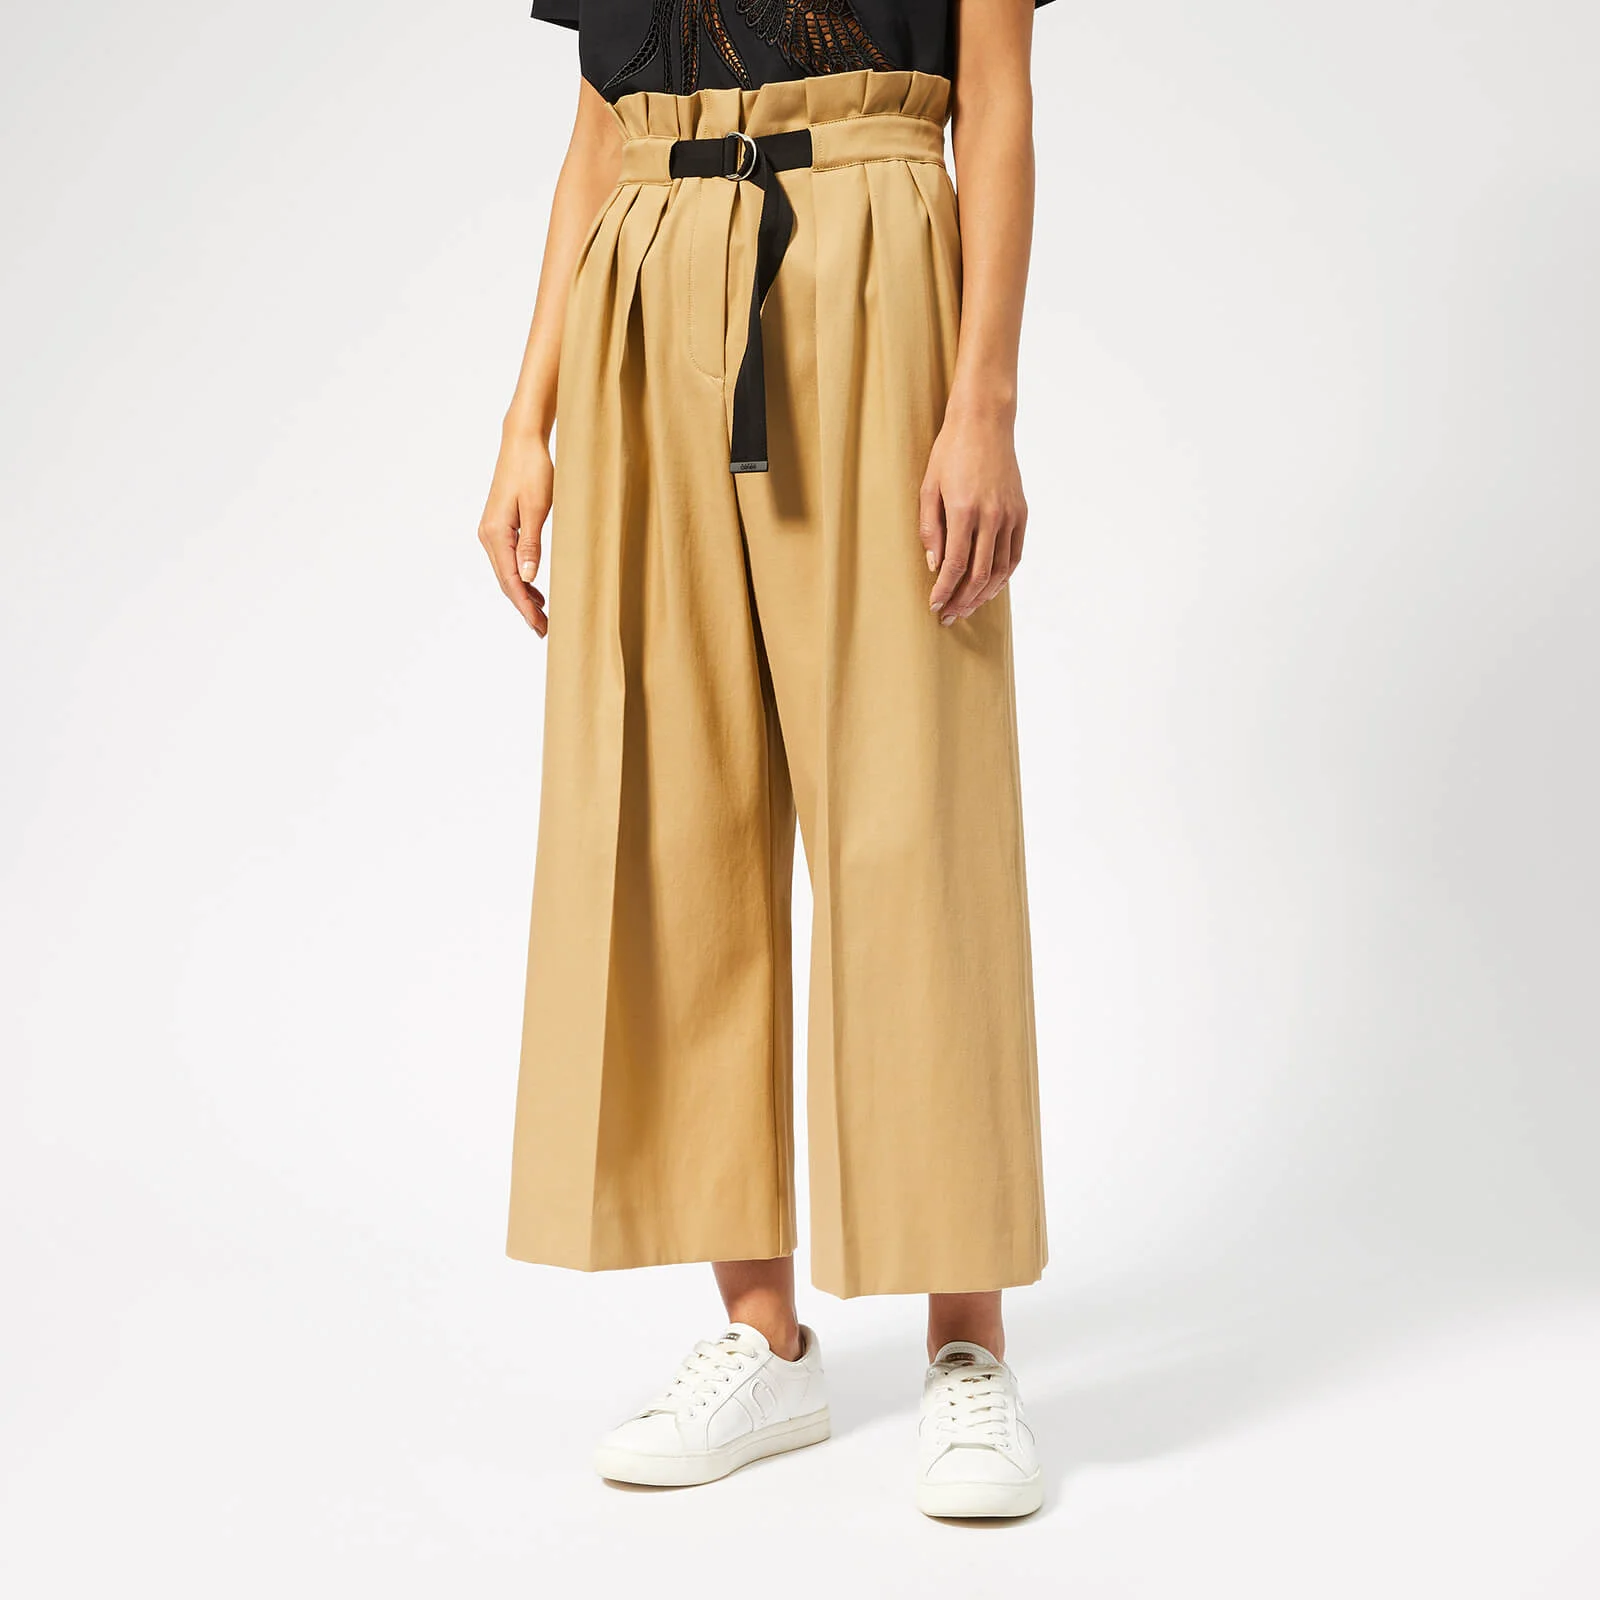 KENZO Women's Cropped Large Belted Pants - Dark Beige Image 1